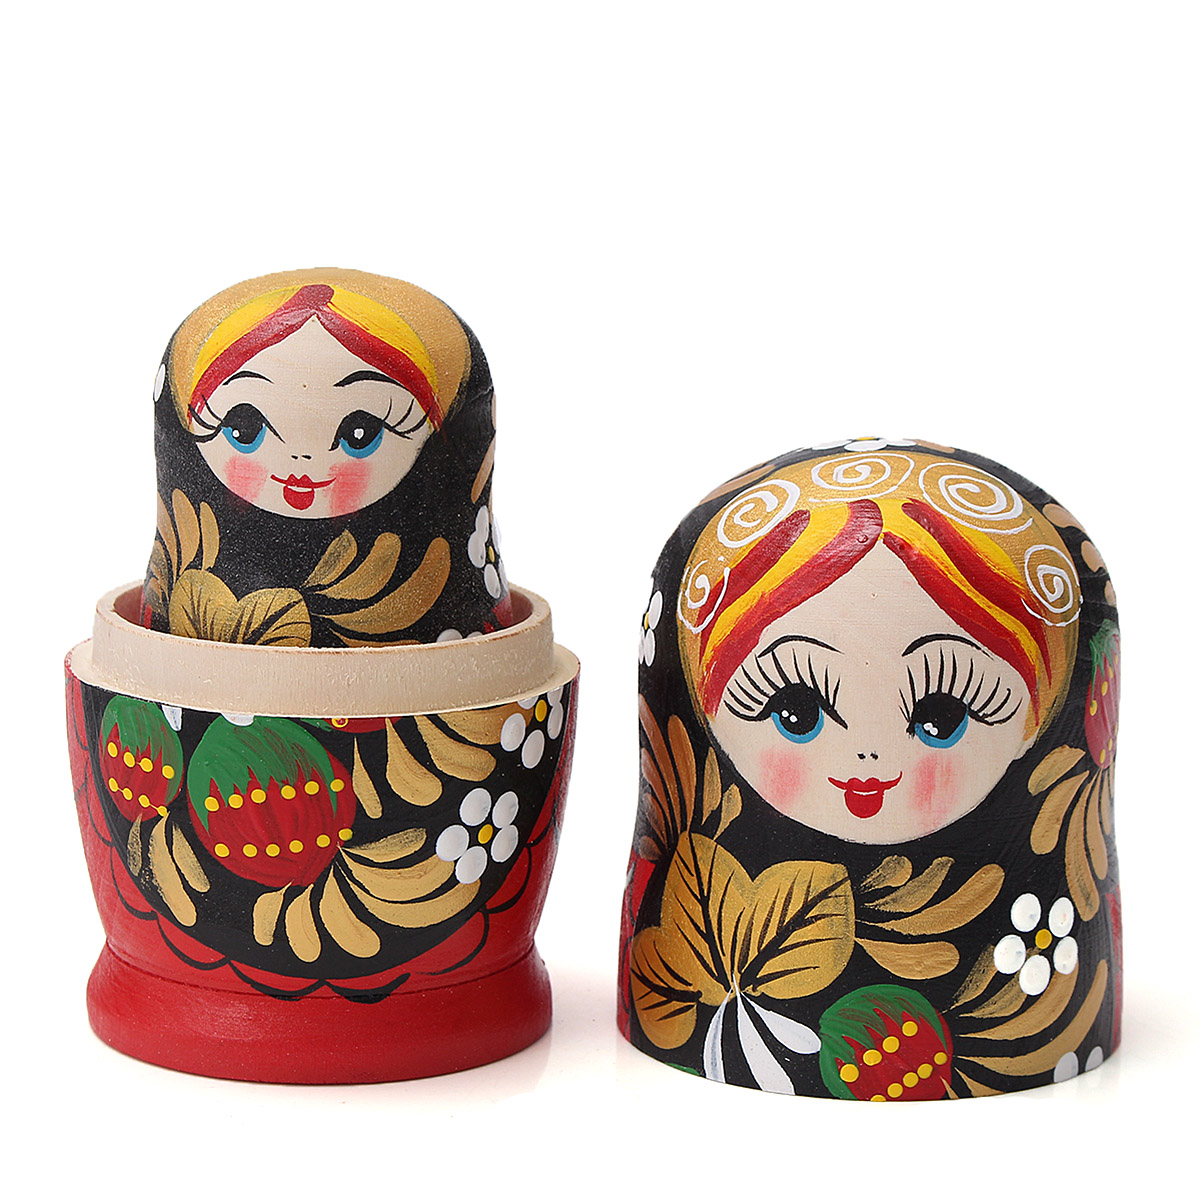 5PCSSet-Wooden-Doll-Matryoshka-Nesting-Russian-Babushka-Toy-Gift-Decor-Collection-1182666-4